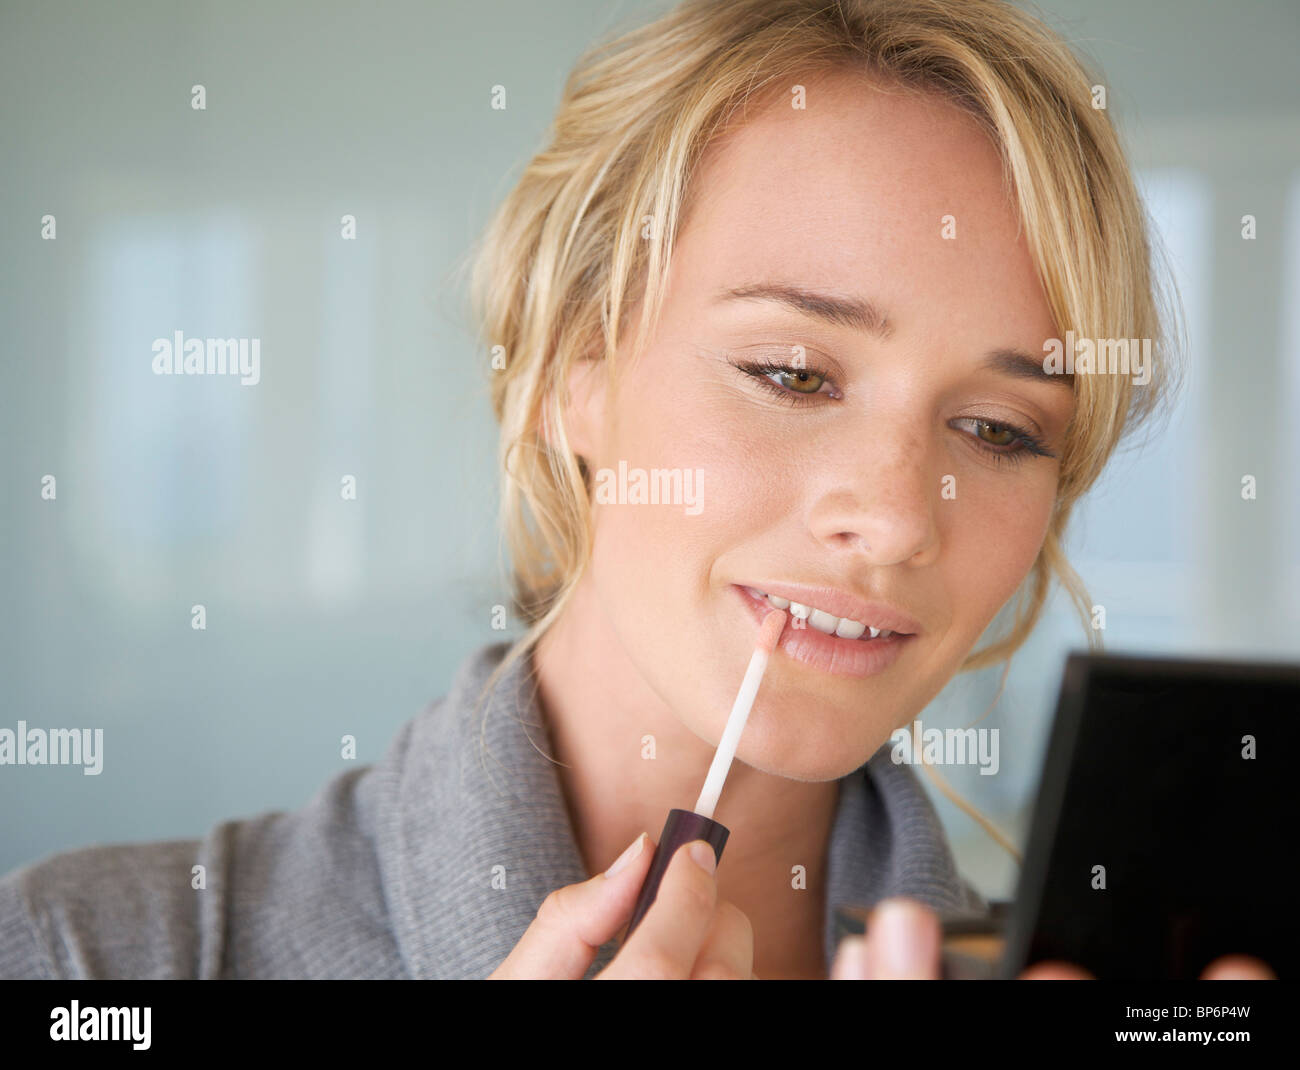 A young woman applying lip gloss Stock Photo